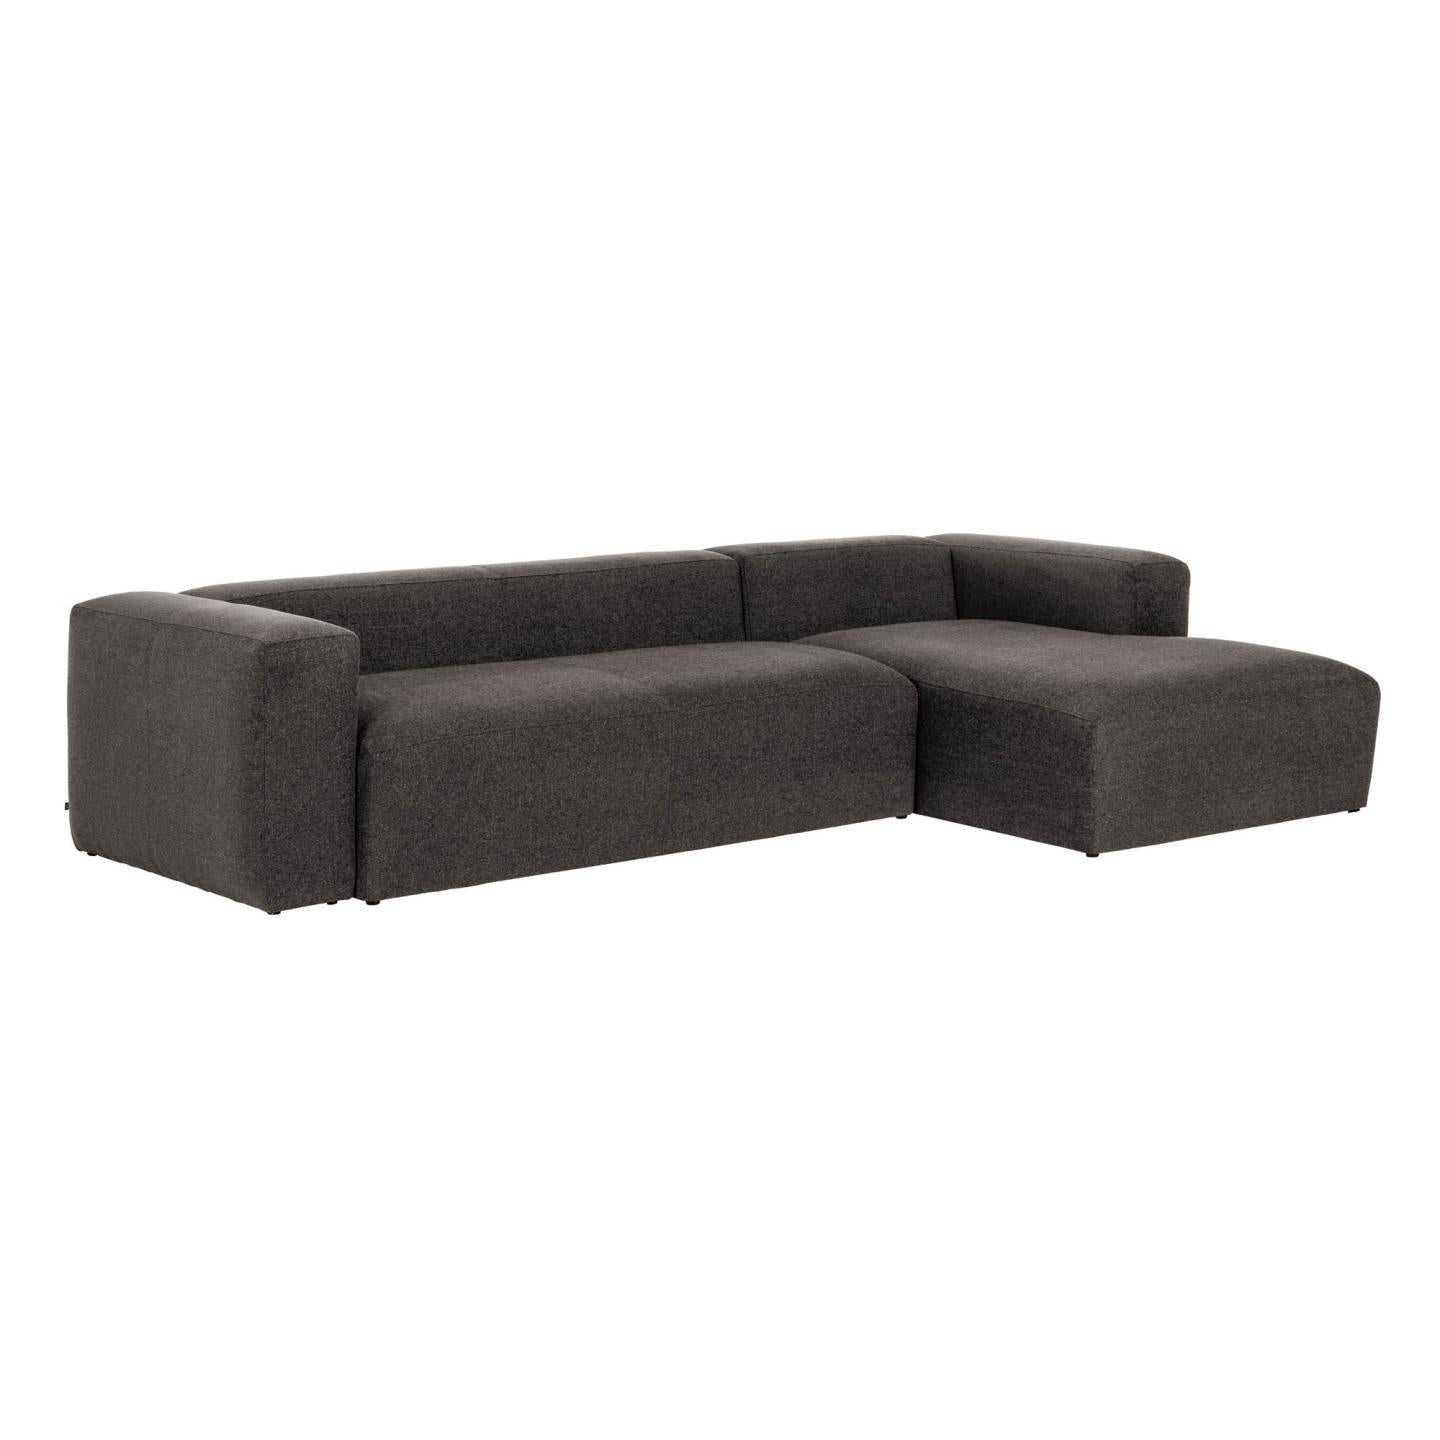 Fabric Sofa W/ Chaise Longue